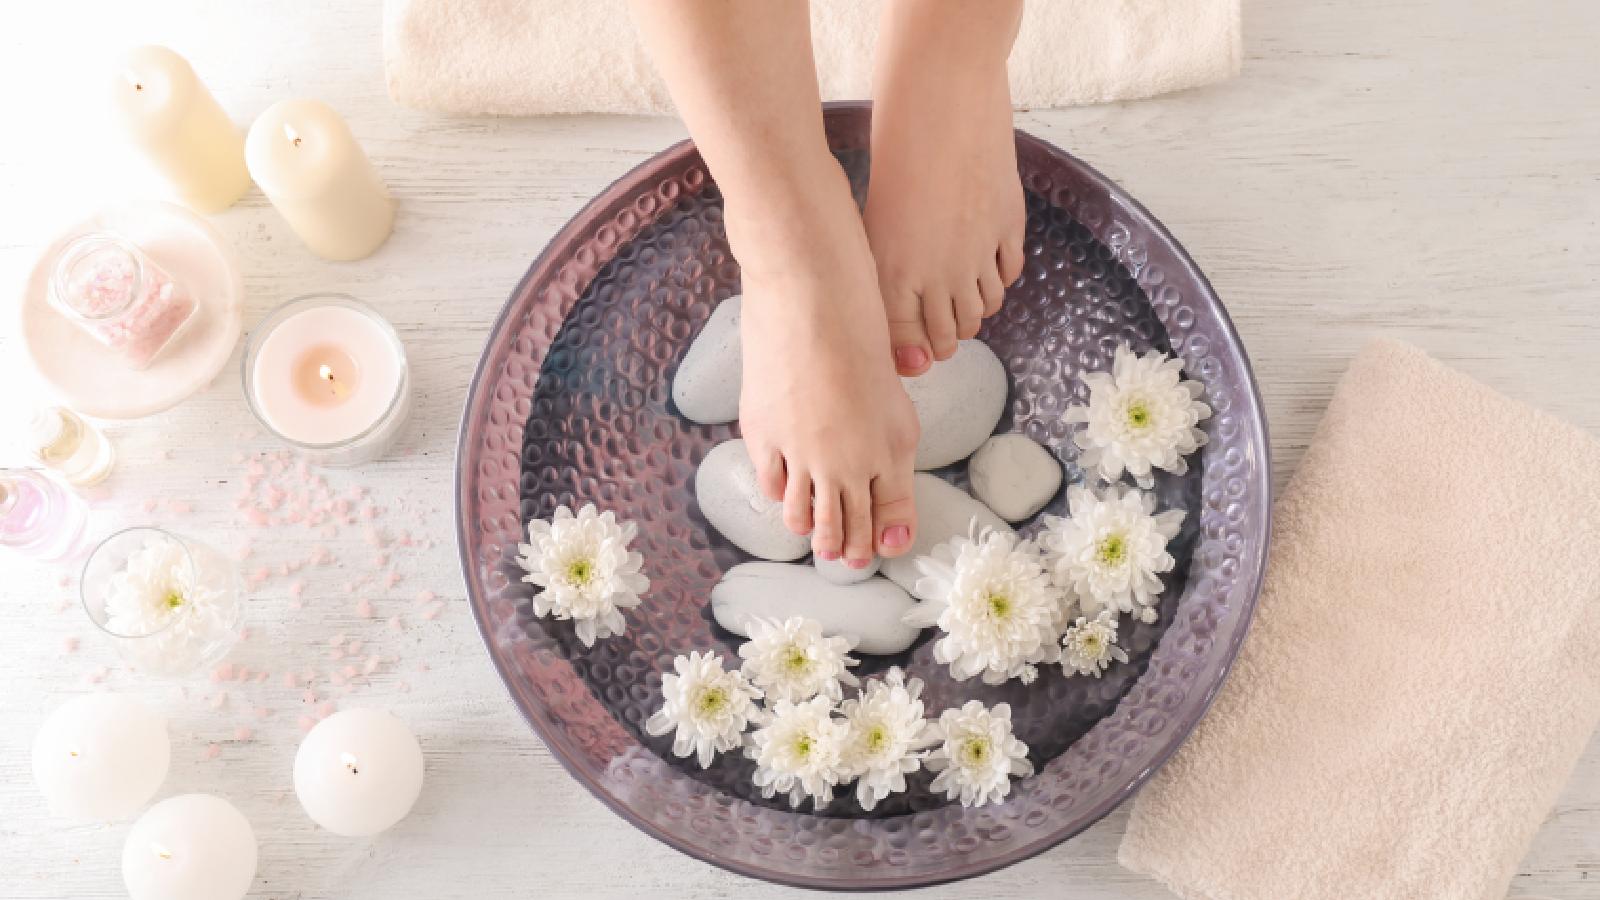 Benefits of foot soaking